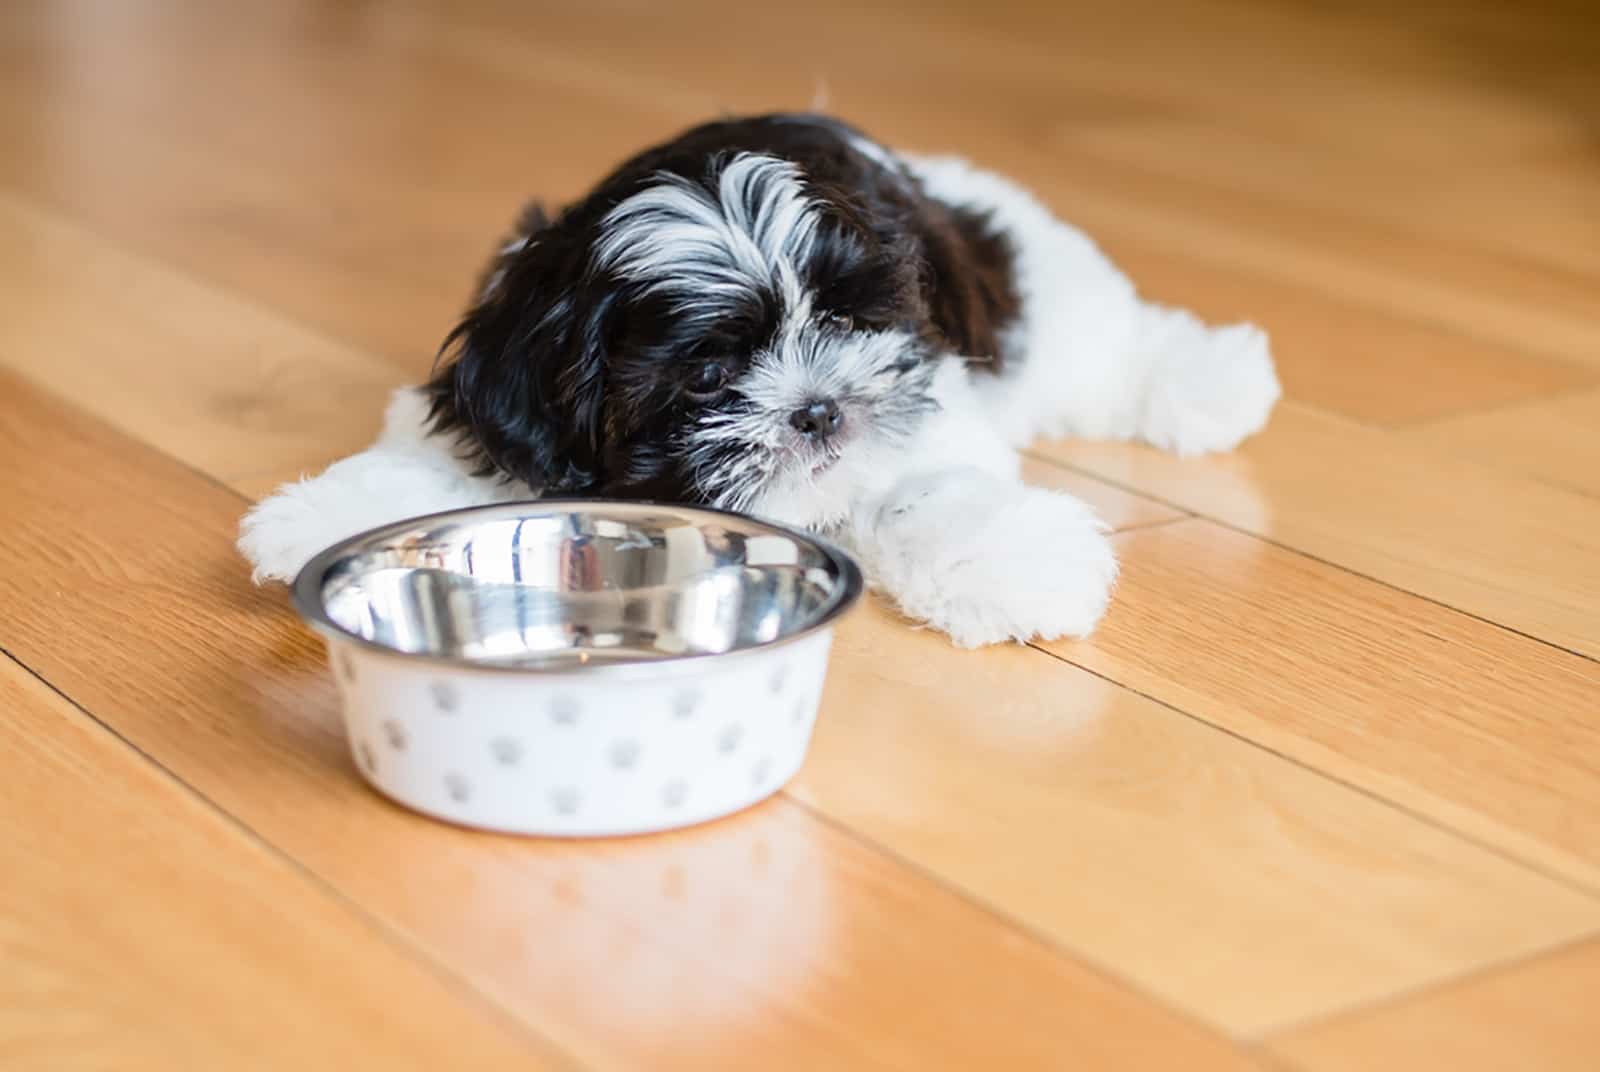 shih tzu puppy lying on the floor near the bowl